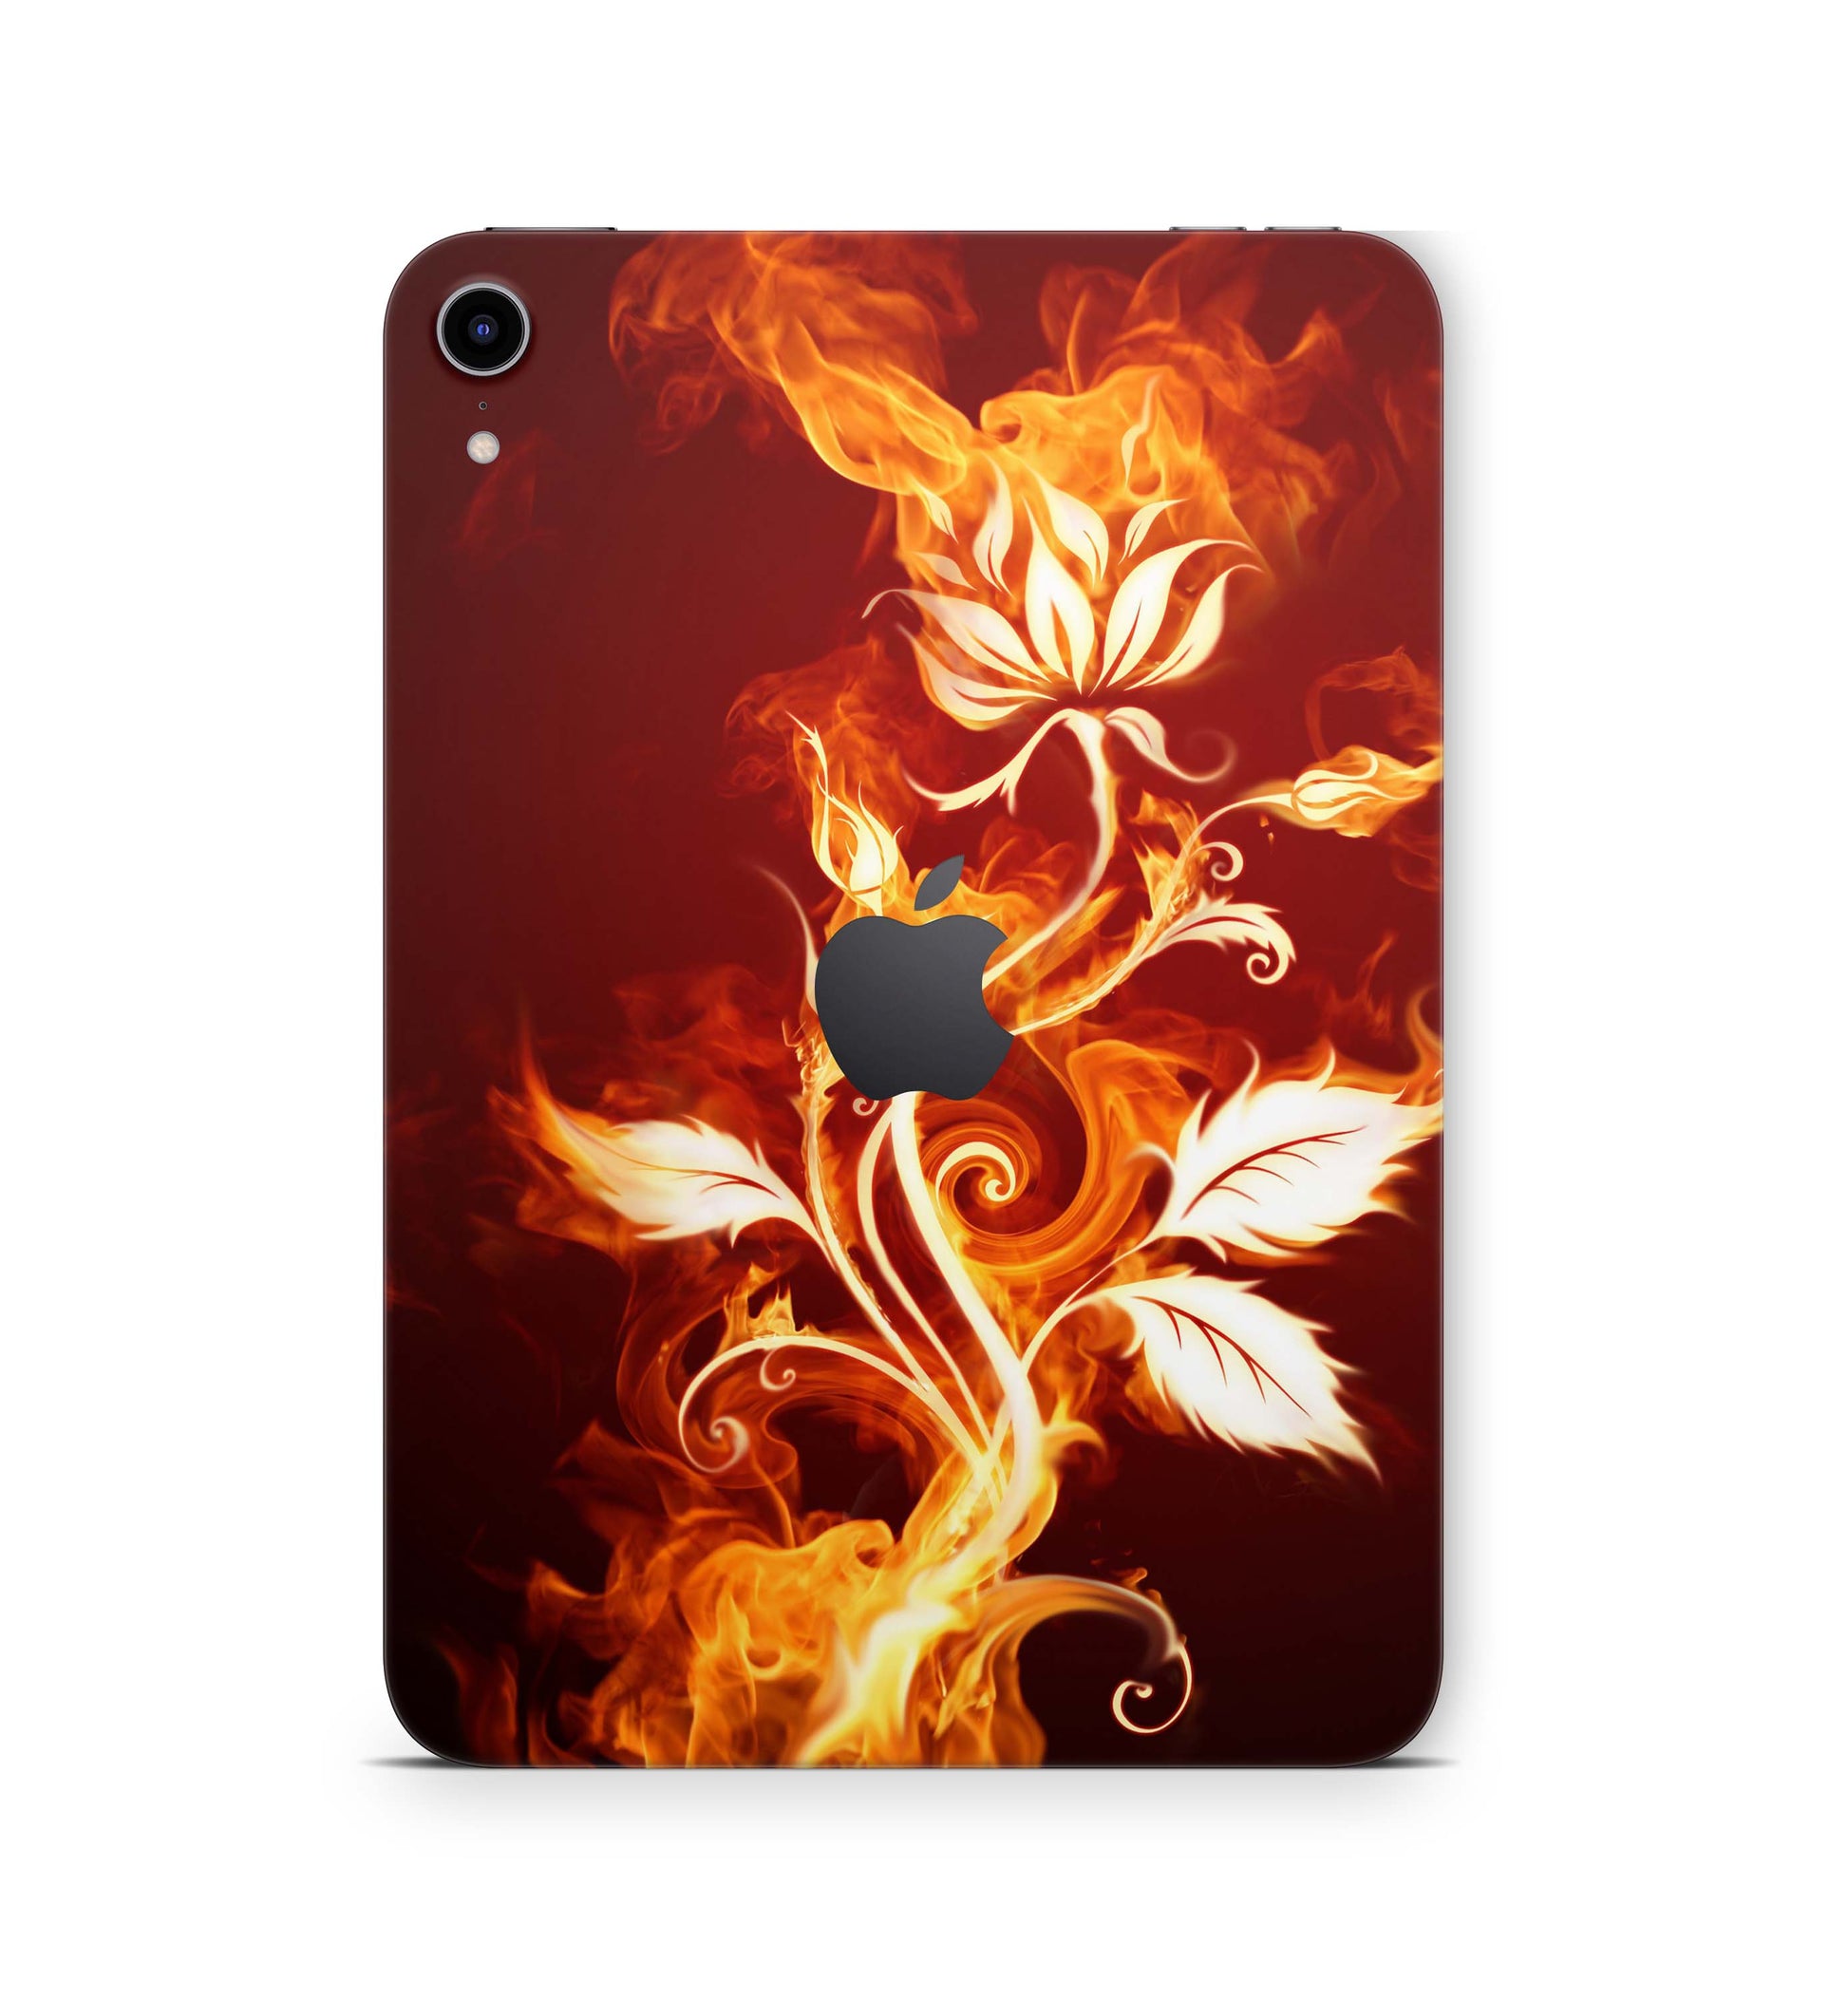 Apple iPad Skin Design Cover Folie Vinyl Skins & Wraps für alle iPad Modelle Aufkleber Skins4u Flower-of-fire  